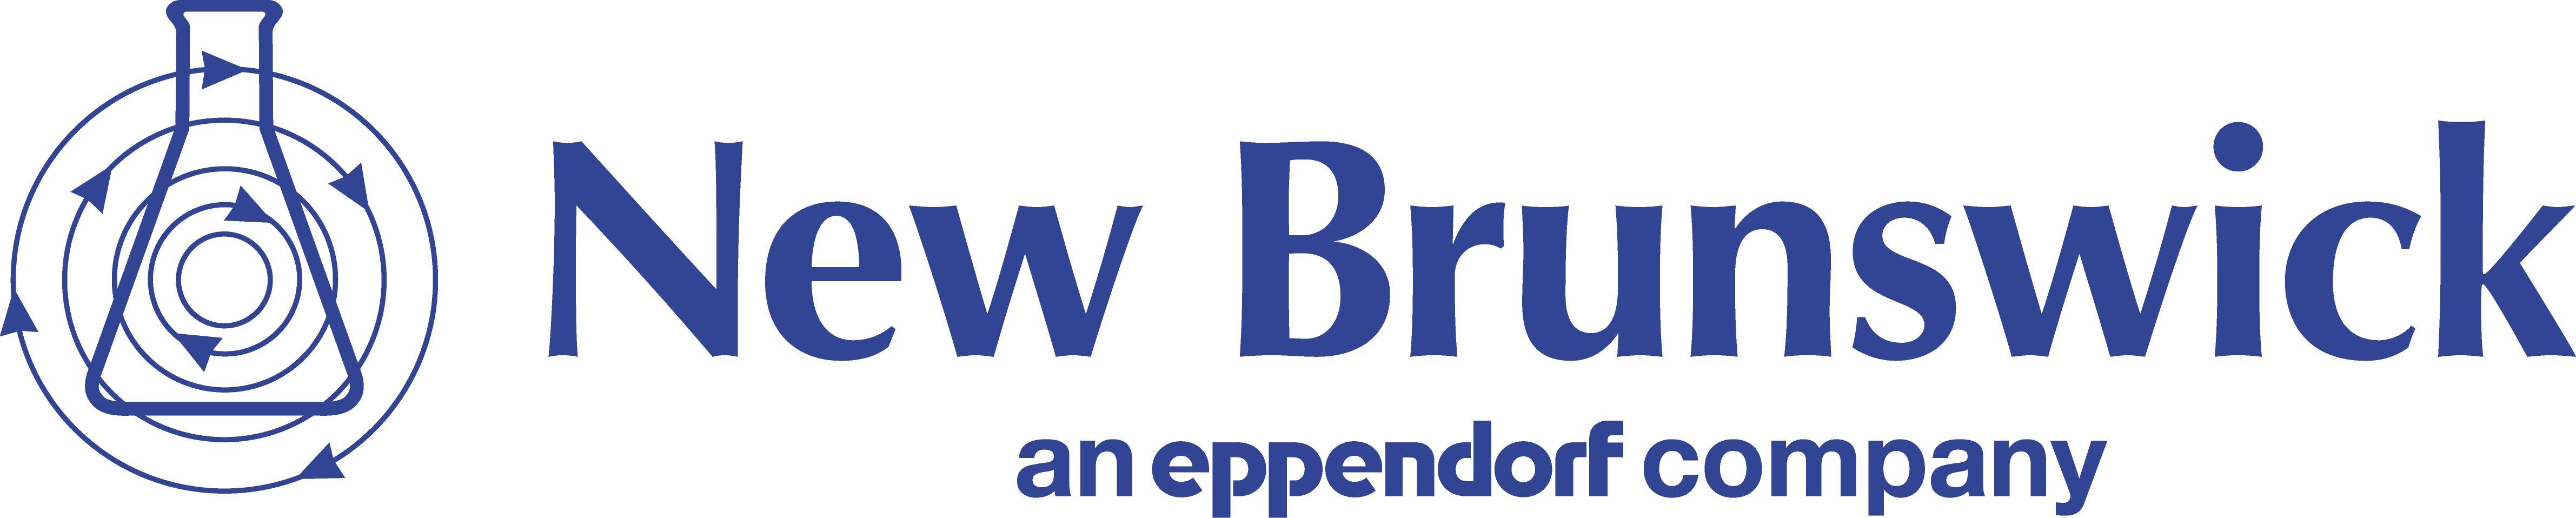 Eppendorf Logo - Index of /files/images/brands